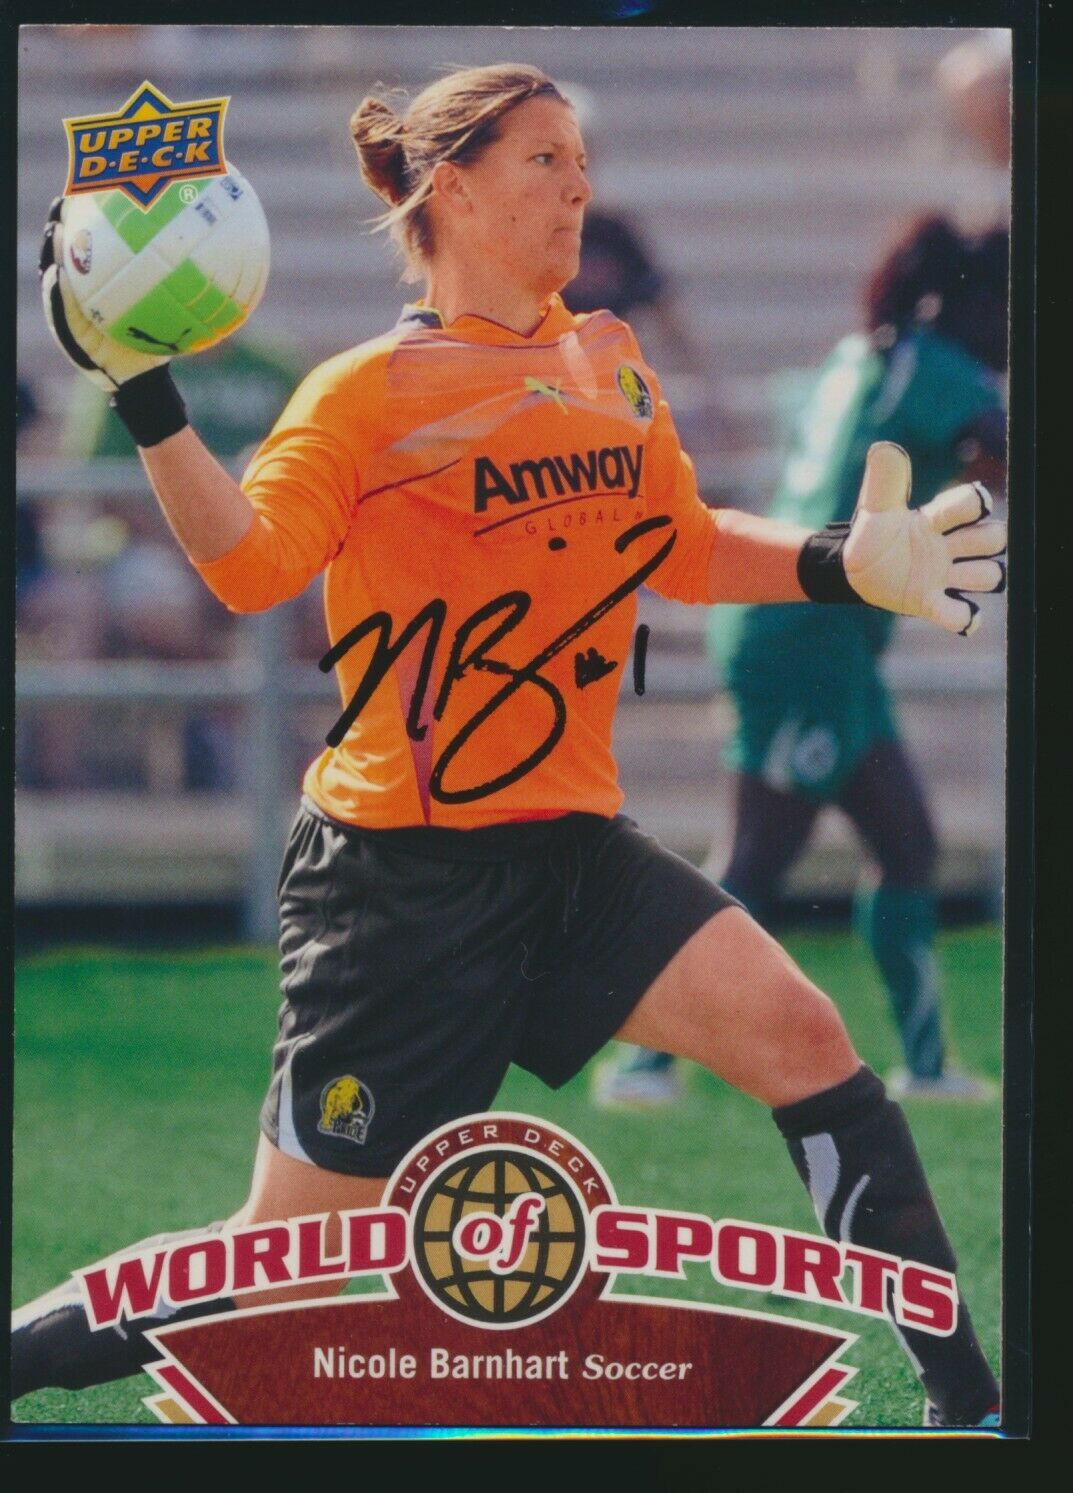 2010 Upper Deck World Of Sports #112 Nicole Barnhart Signed Autograph Auto Wps